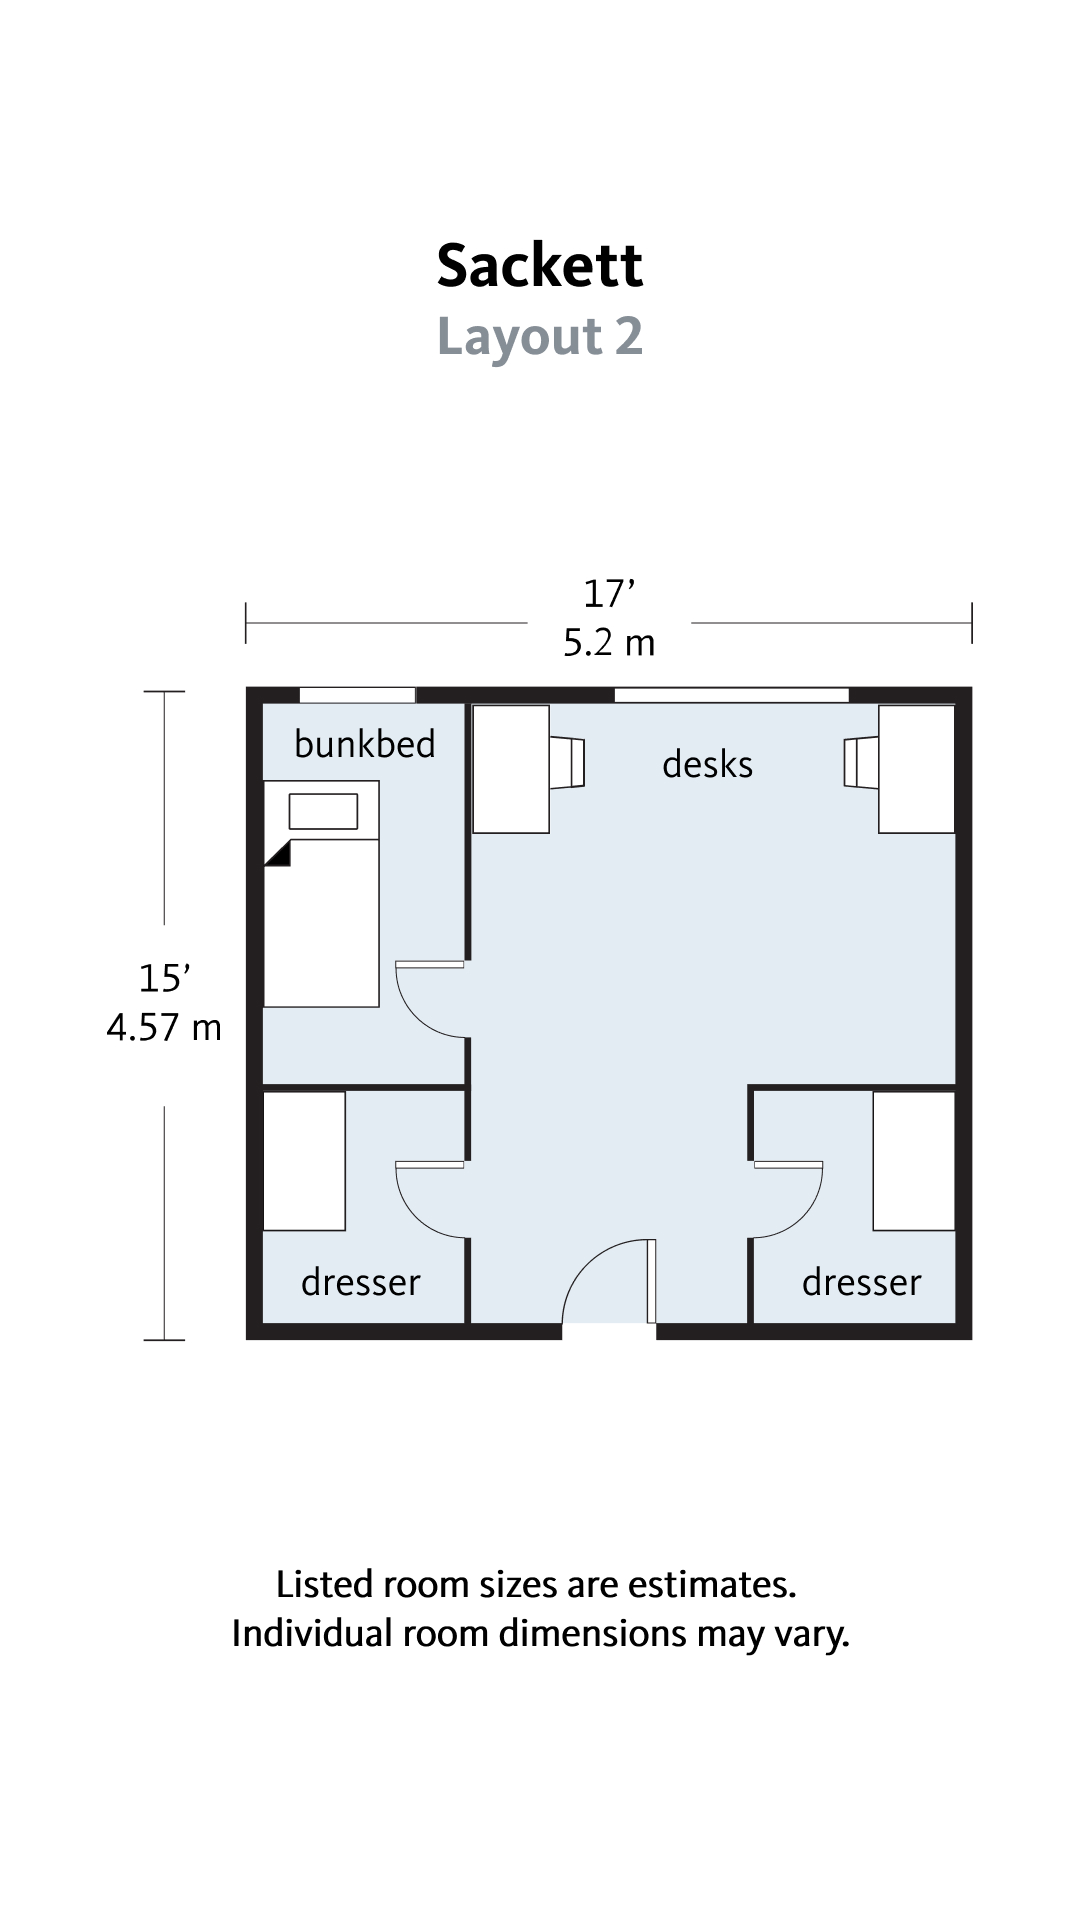 Floorplan 2 for Sackett hall